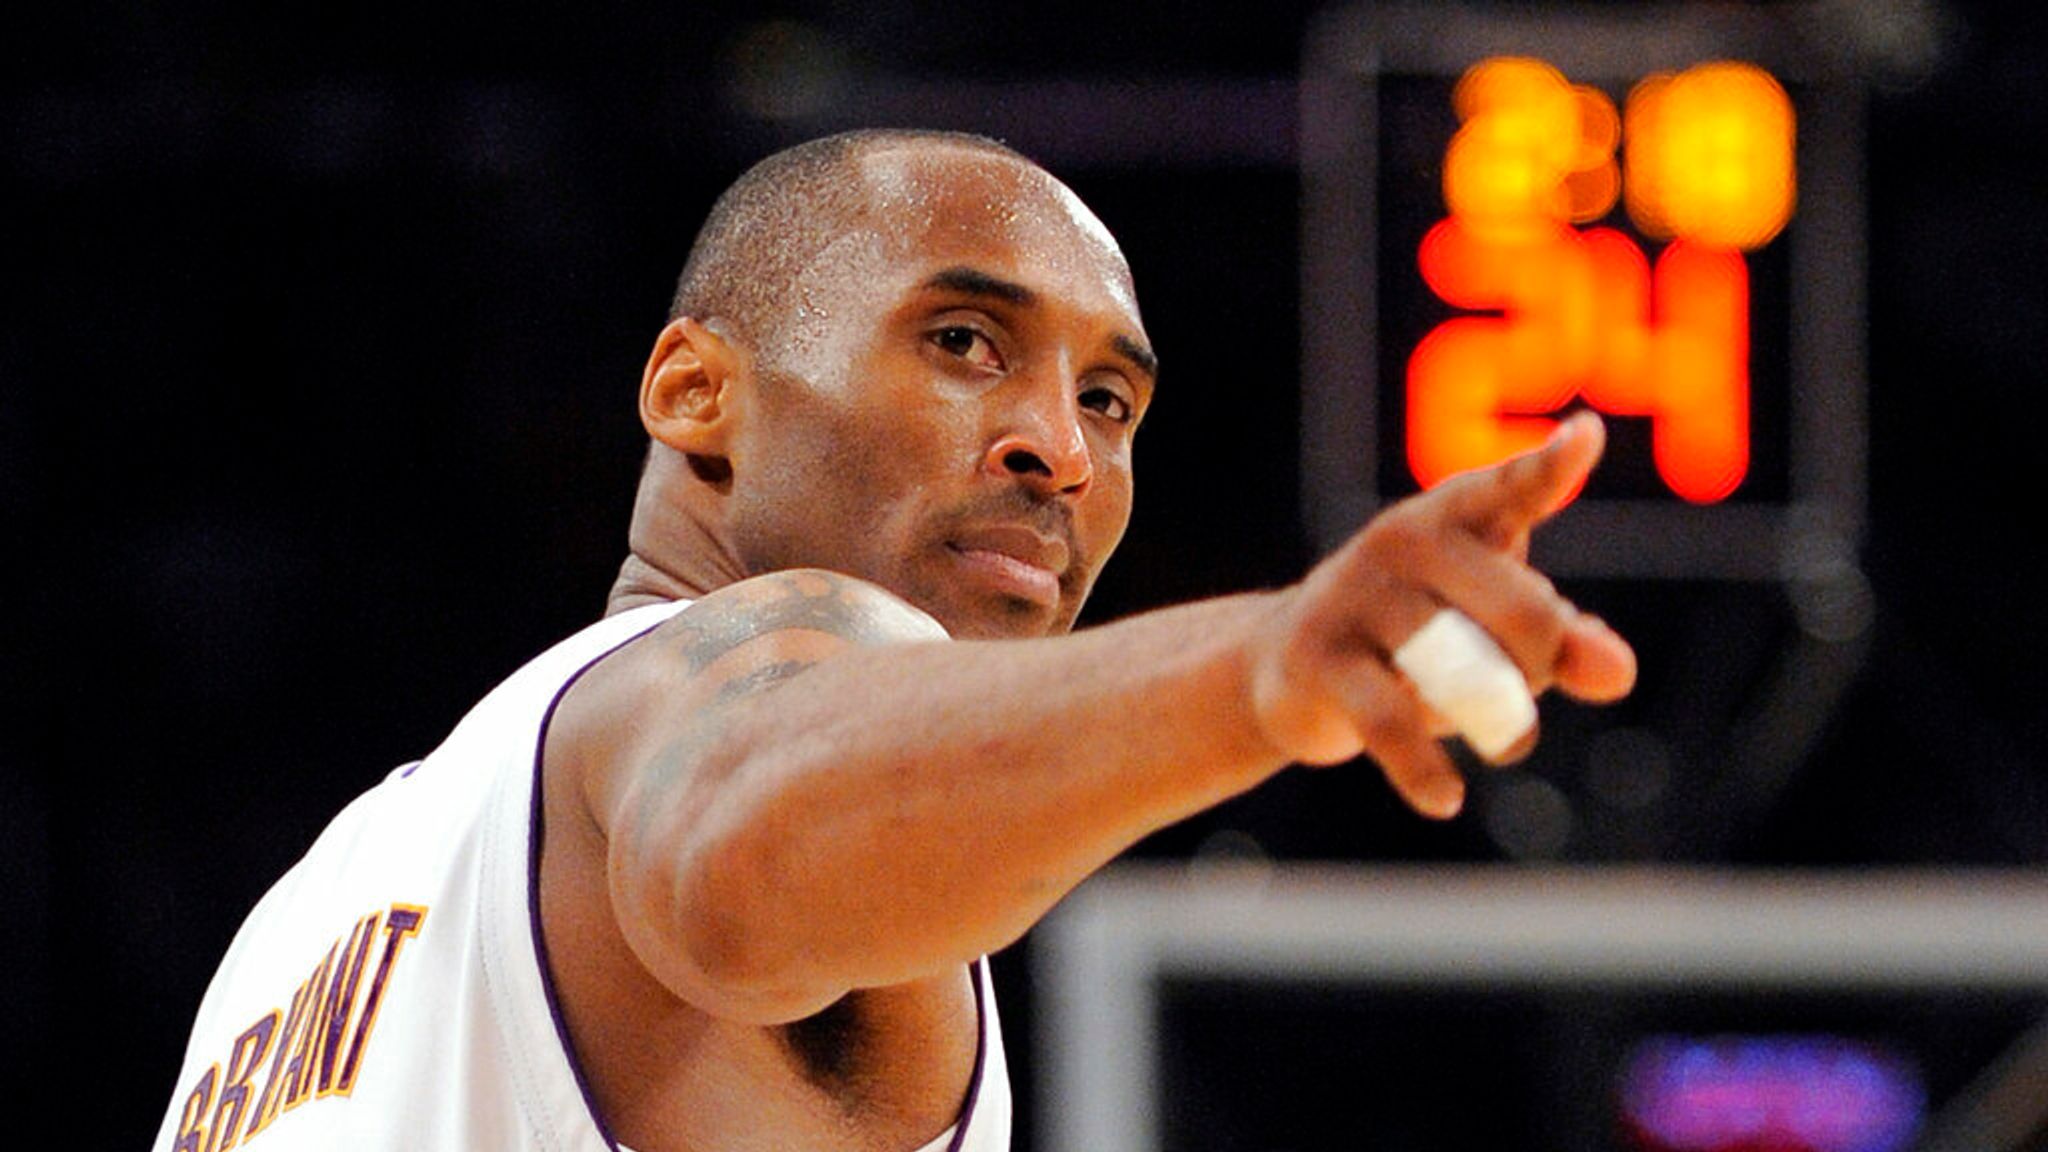 Kyrie Irving wears Kobe Bryant Lakers' jersey ahead Nets, Heat game